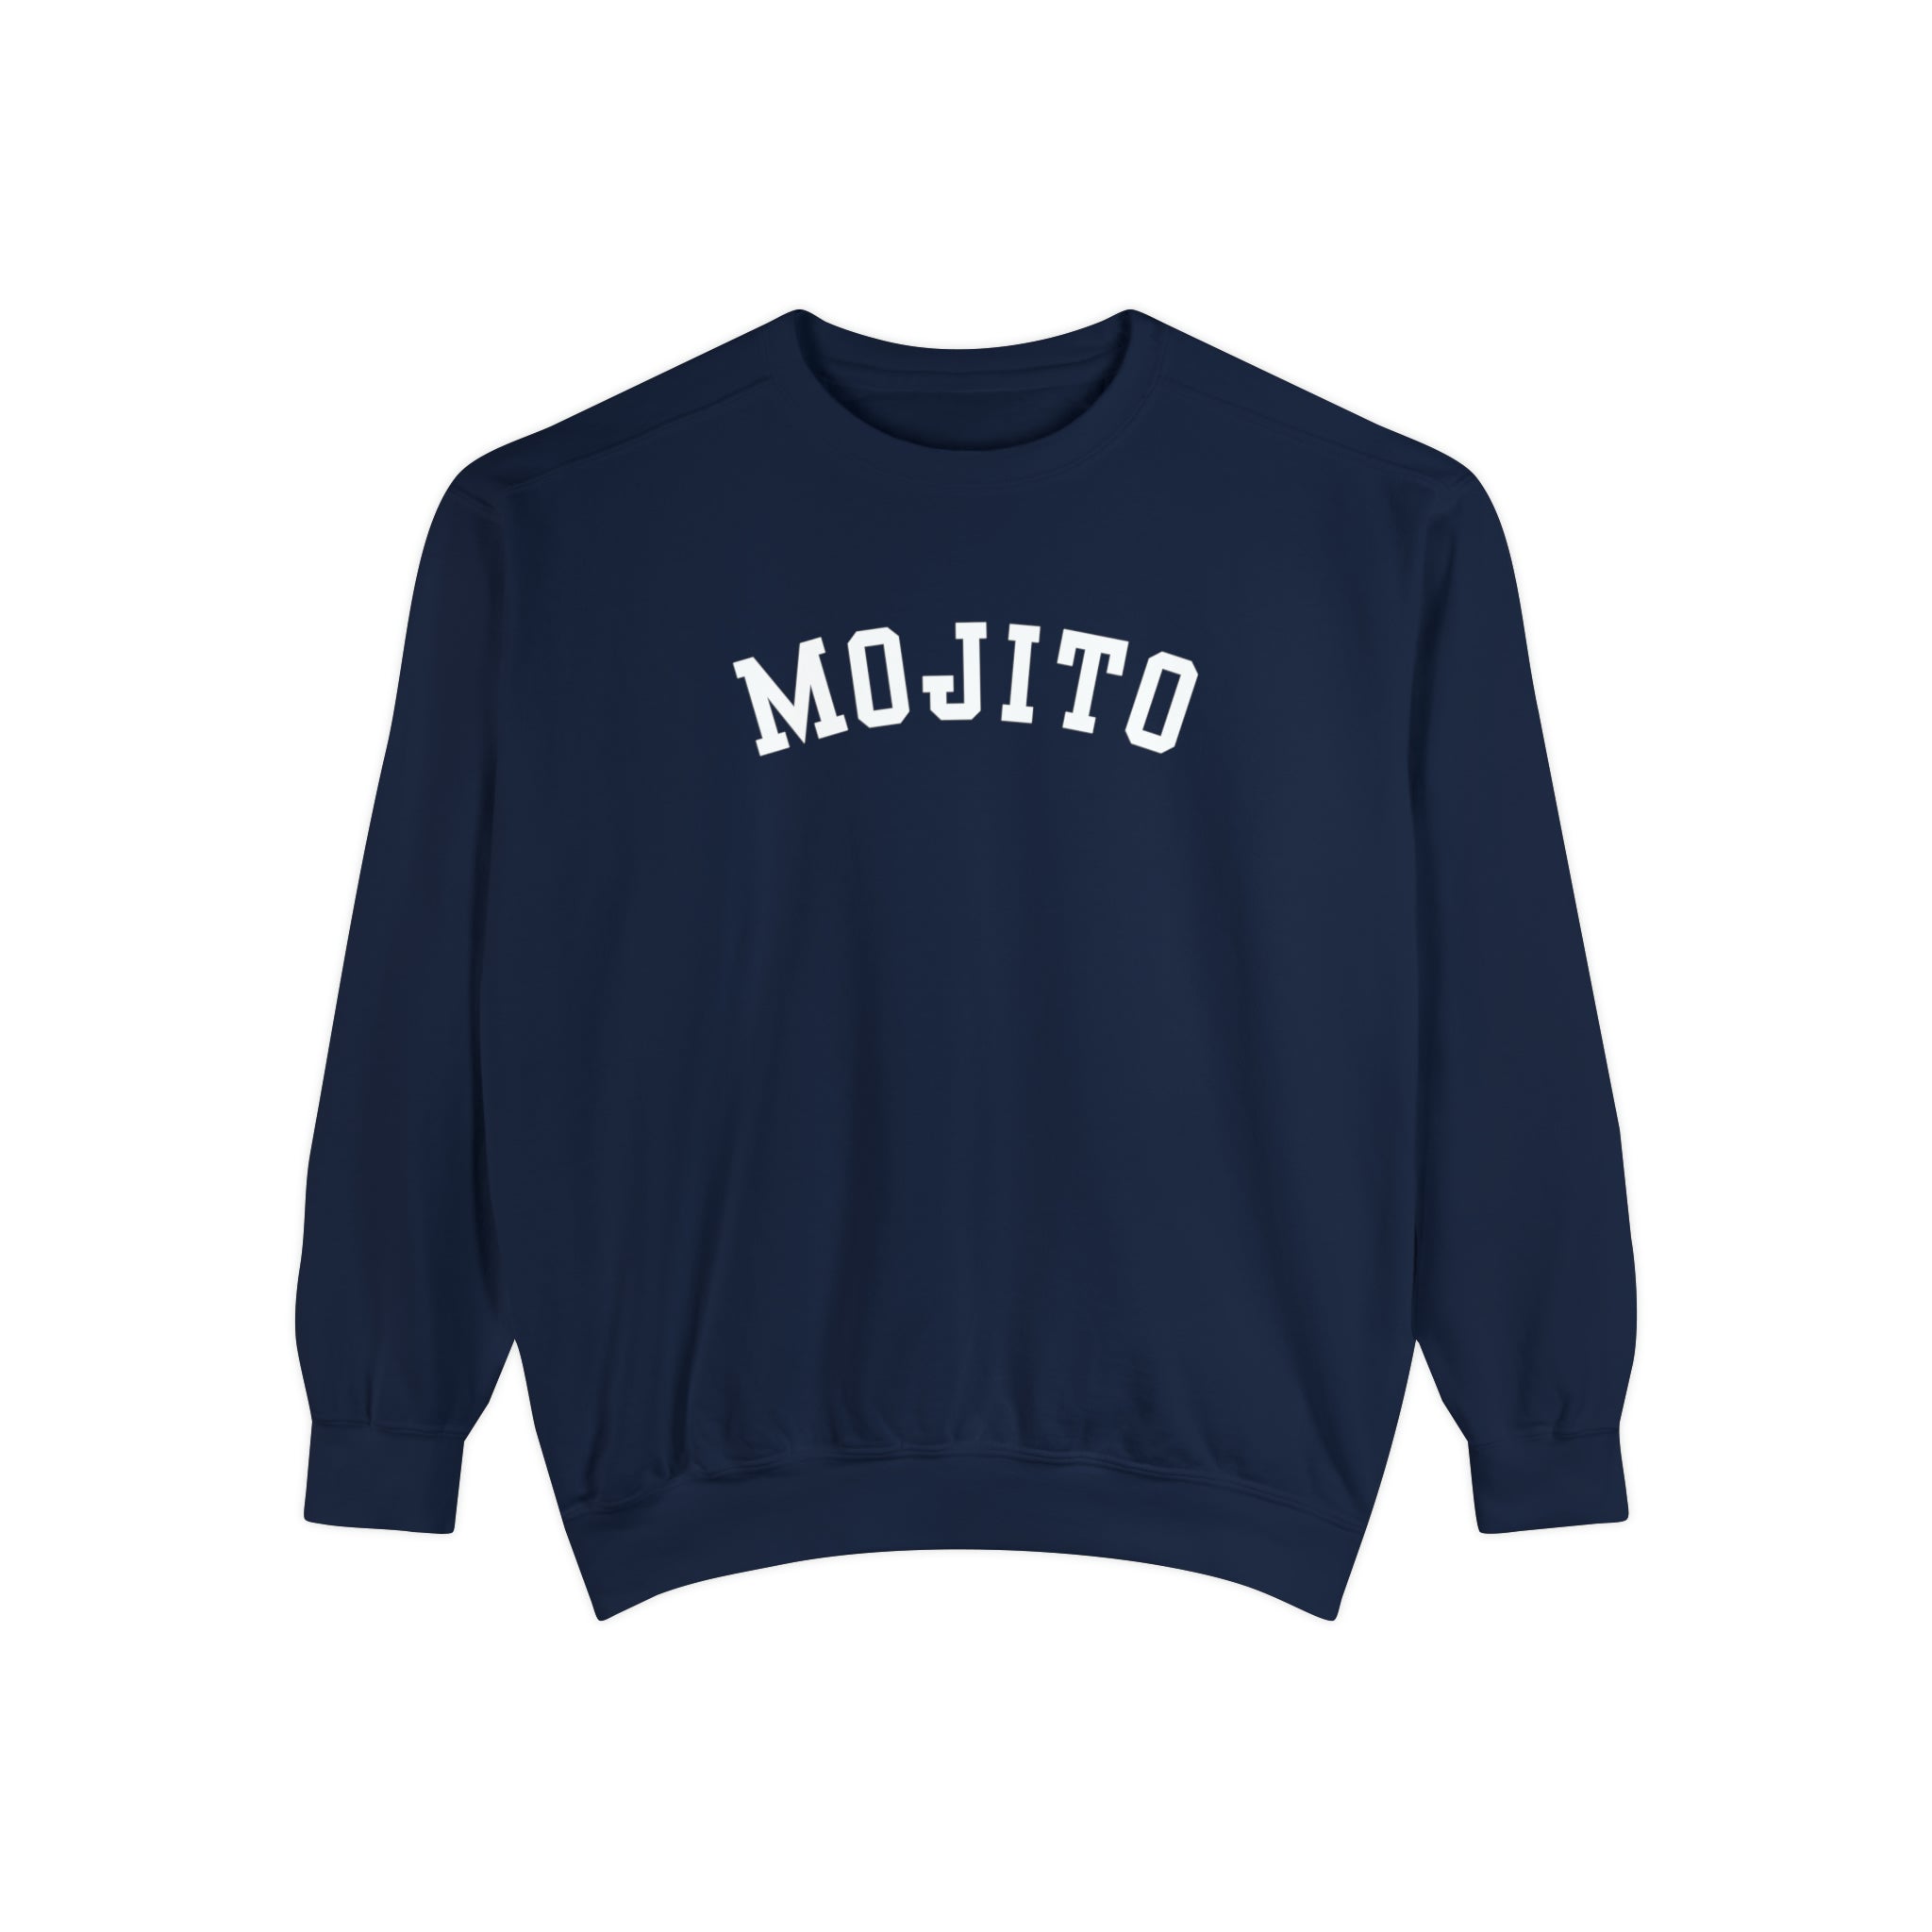 Mojito Comfort Colors Crewneck Sweatshirt